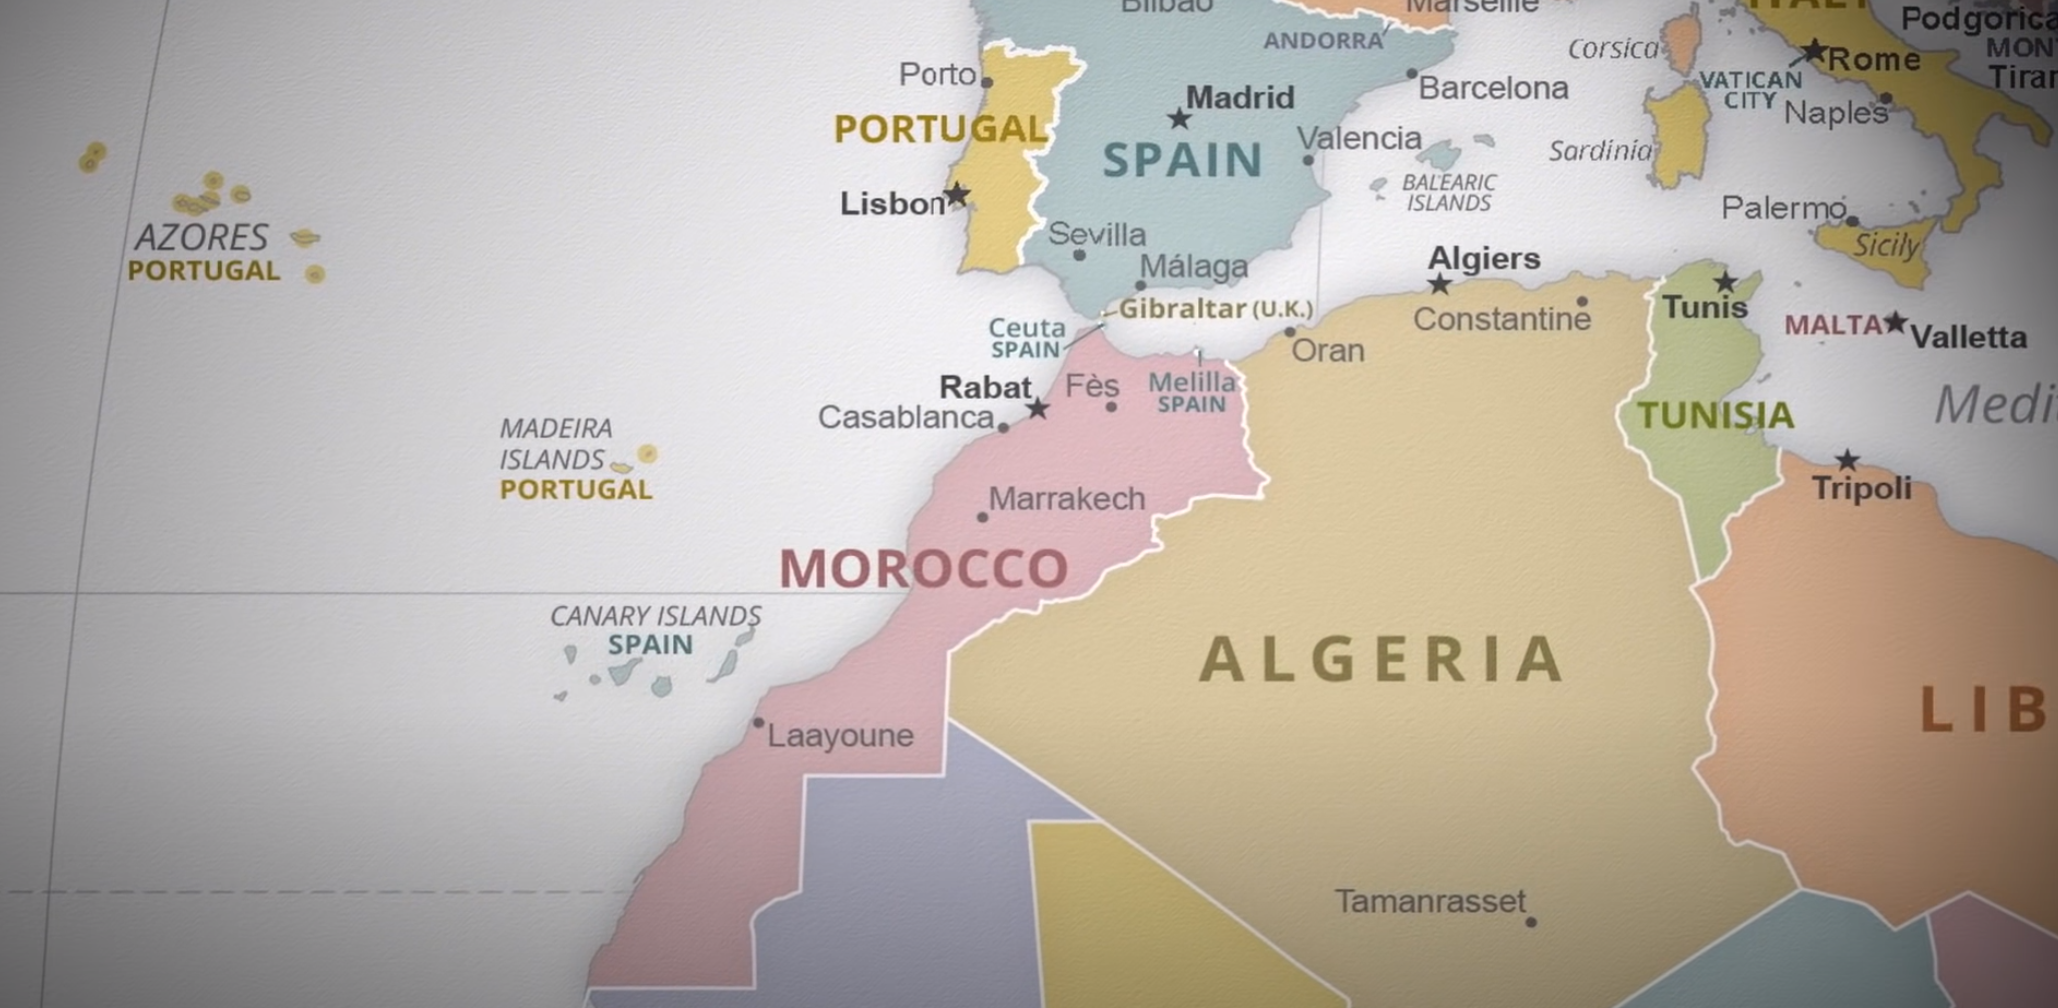 The Kingdom of Morocco - Economy & Trade